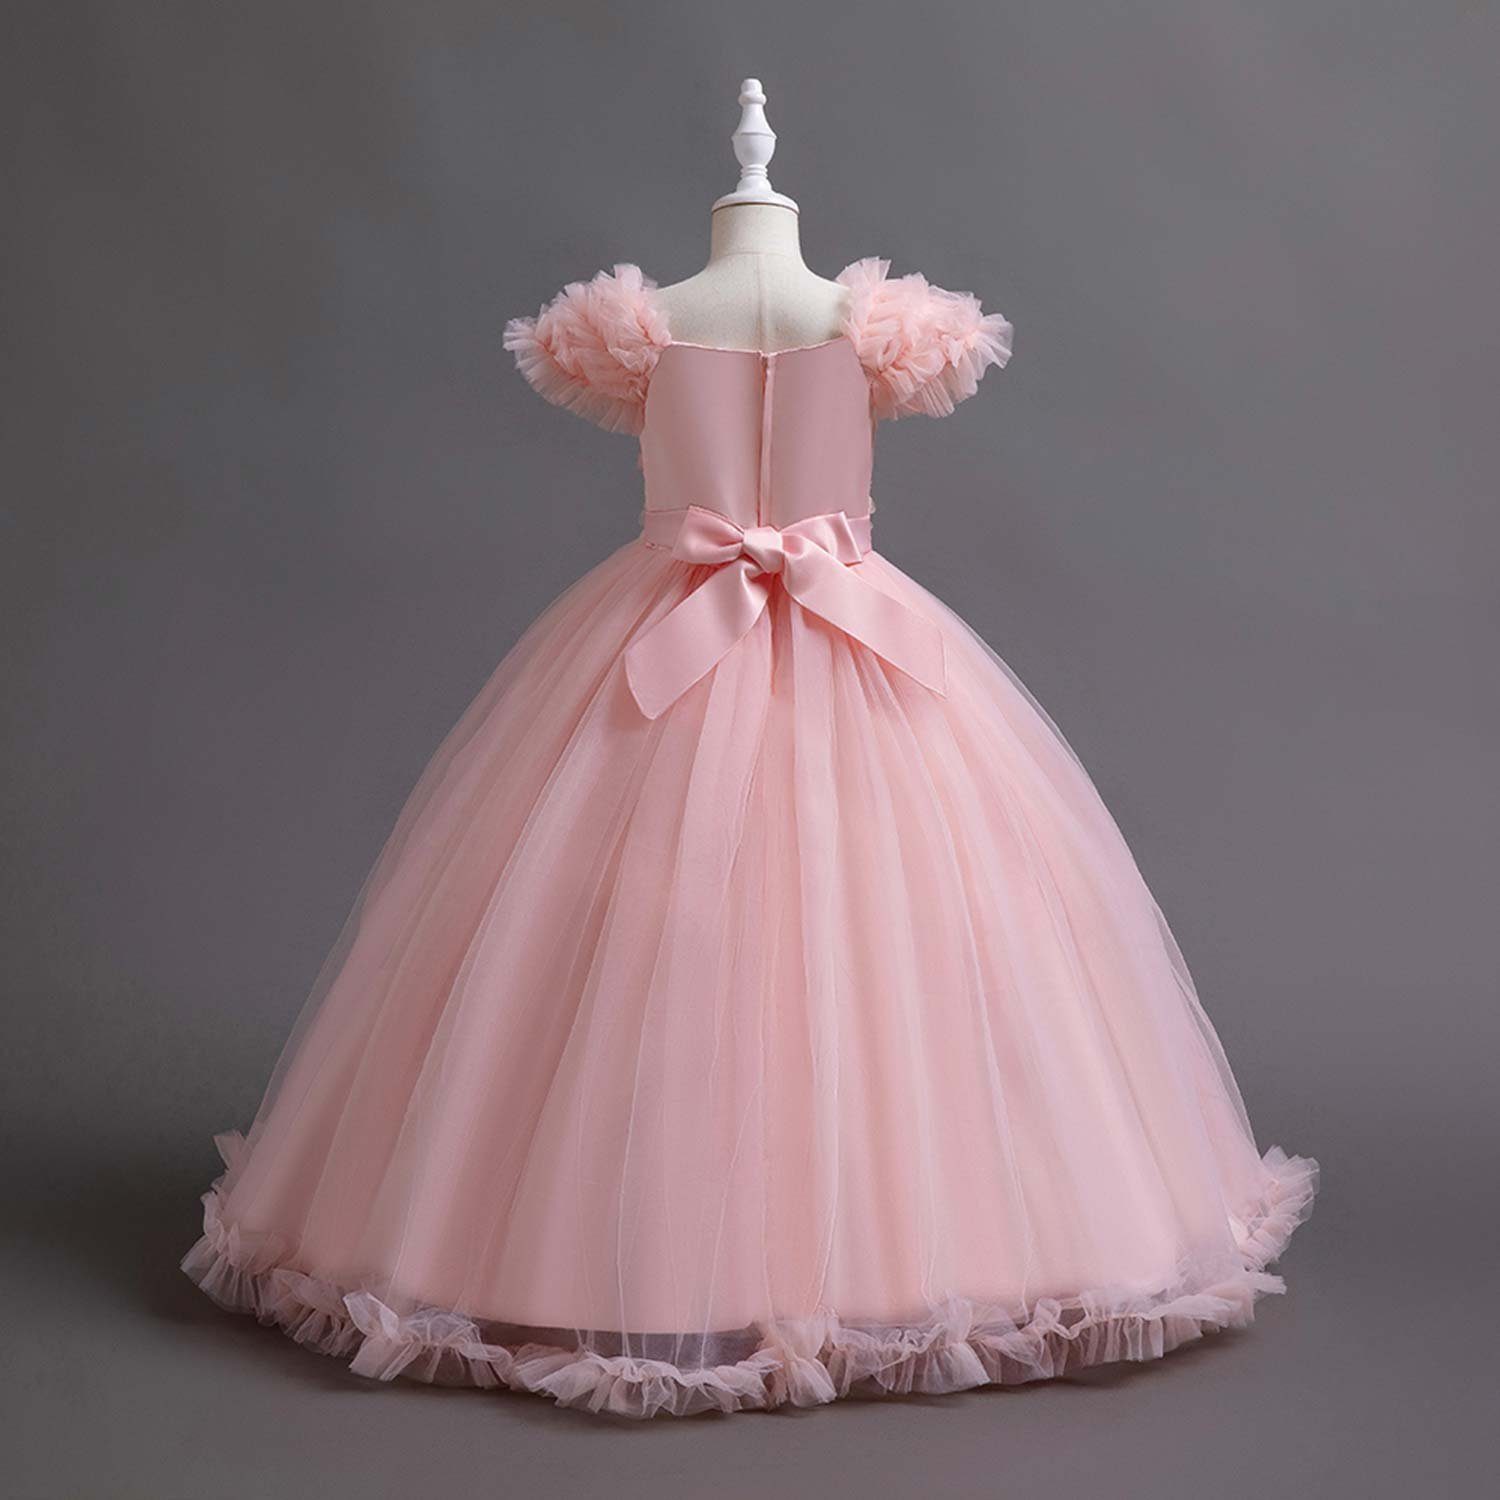 Tüllkleid Ballkleid Rosa Prinzessinnenkleider Abendkleider Daisred Kinderkleider